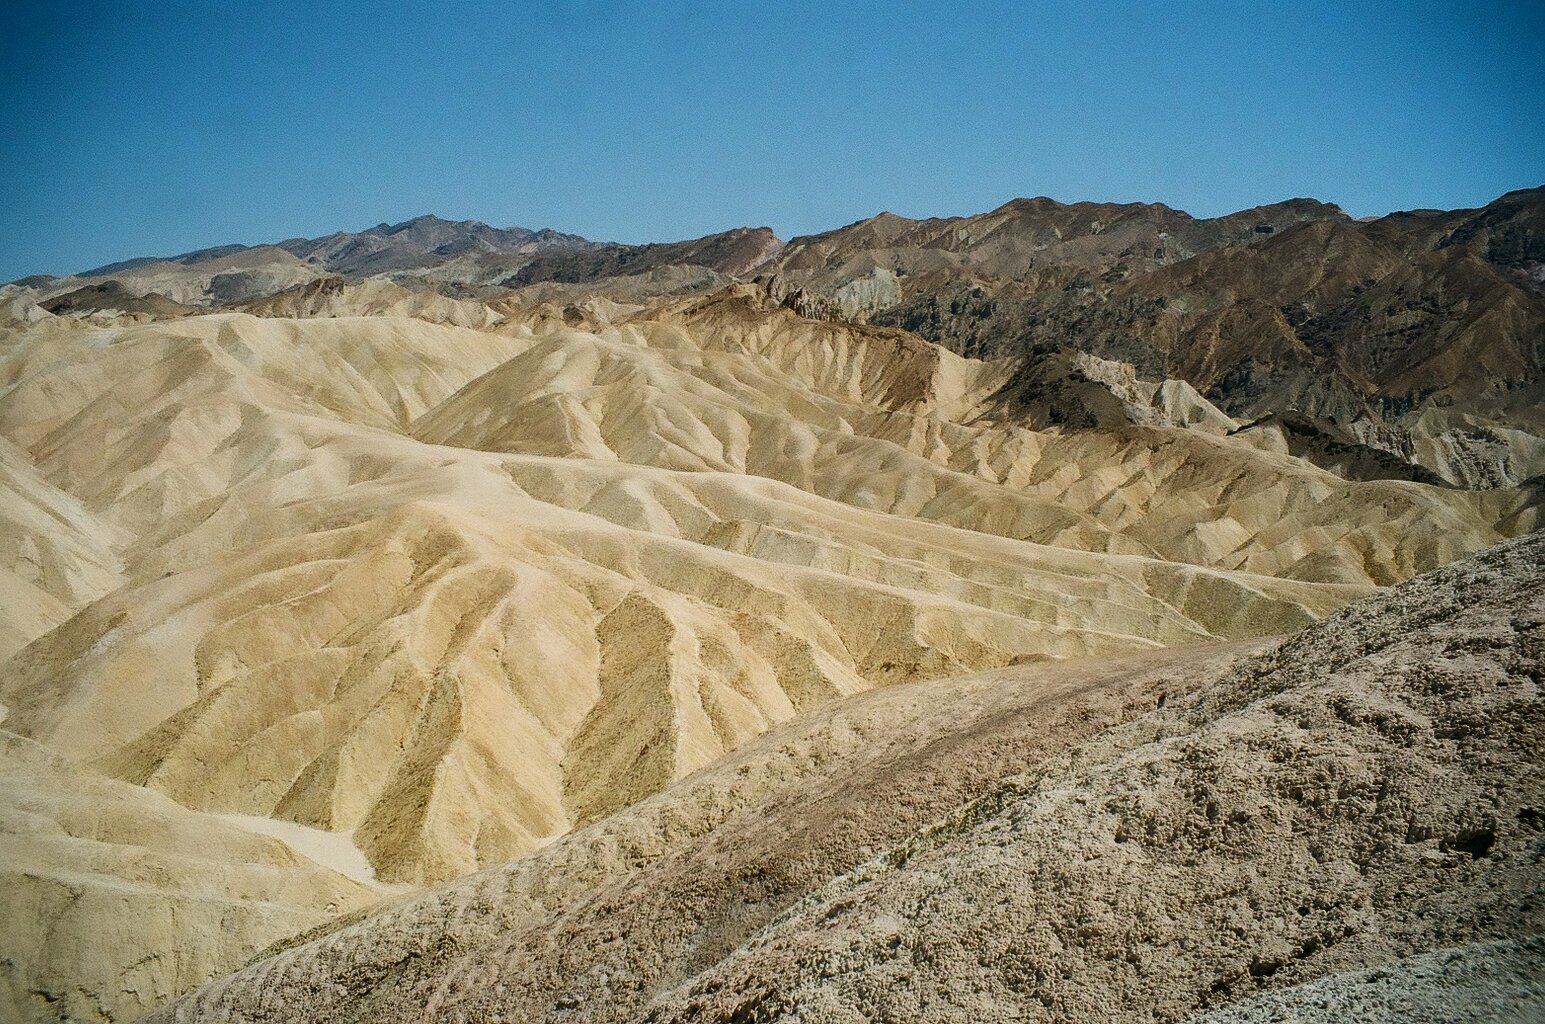  Death Valley National Park, California. 2021. 